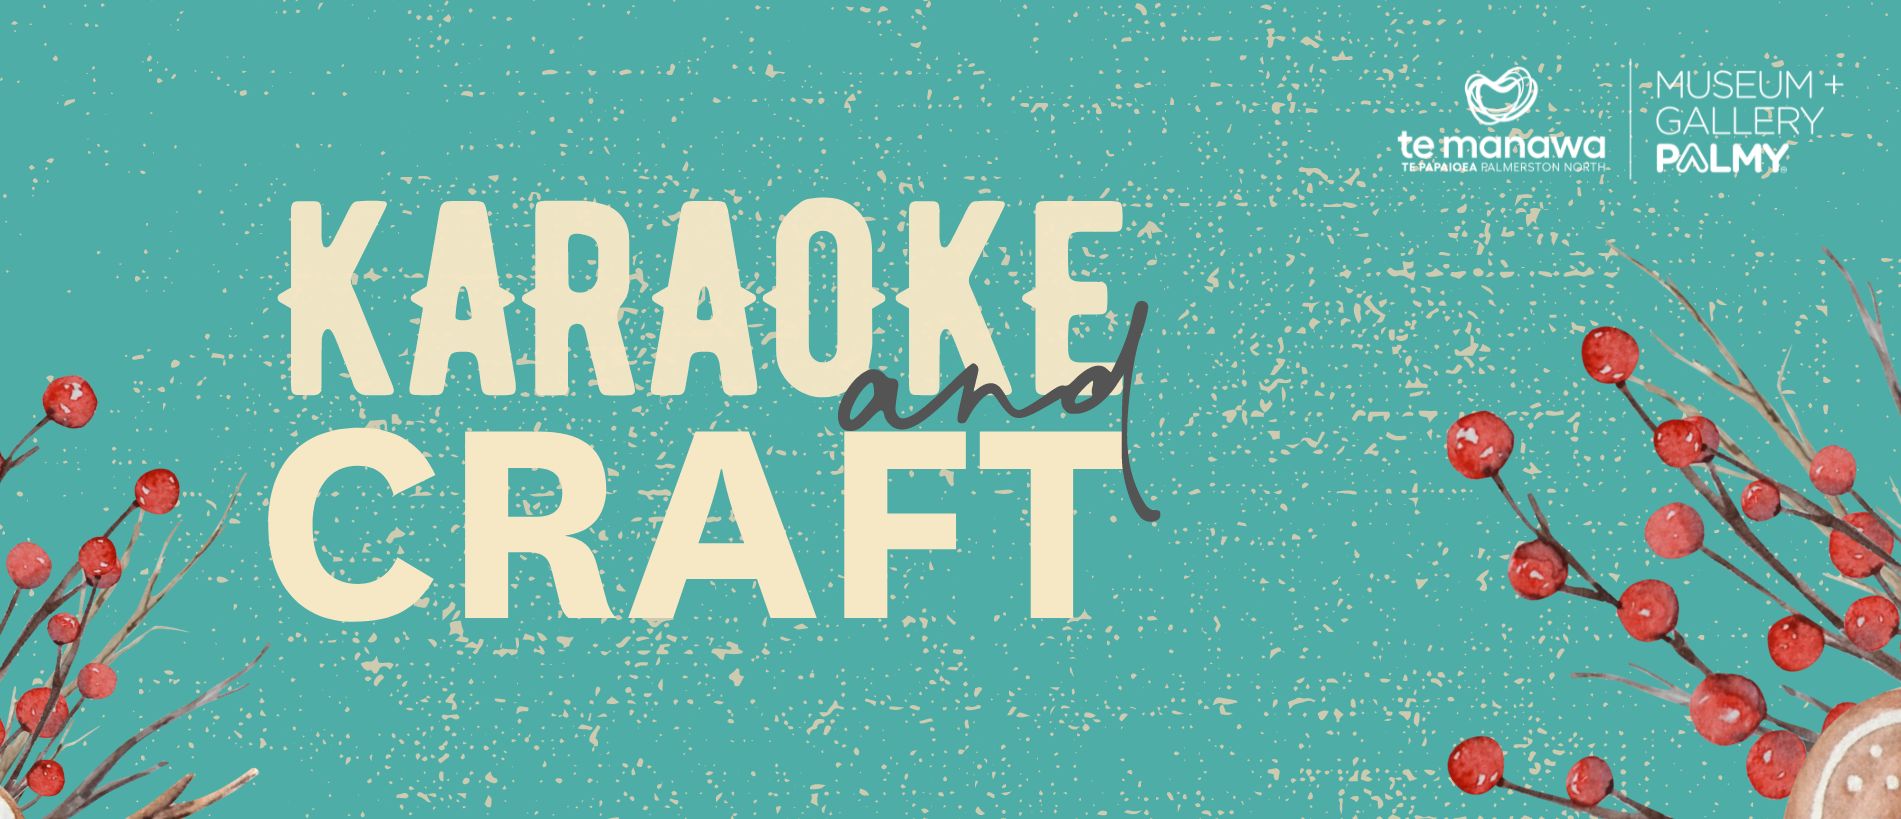 advertisement image that says "Karaoke & Craft"